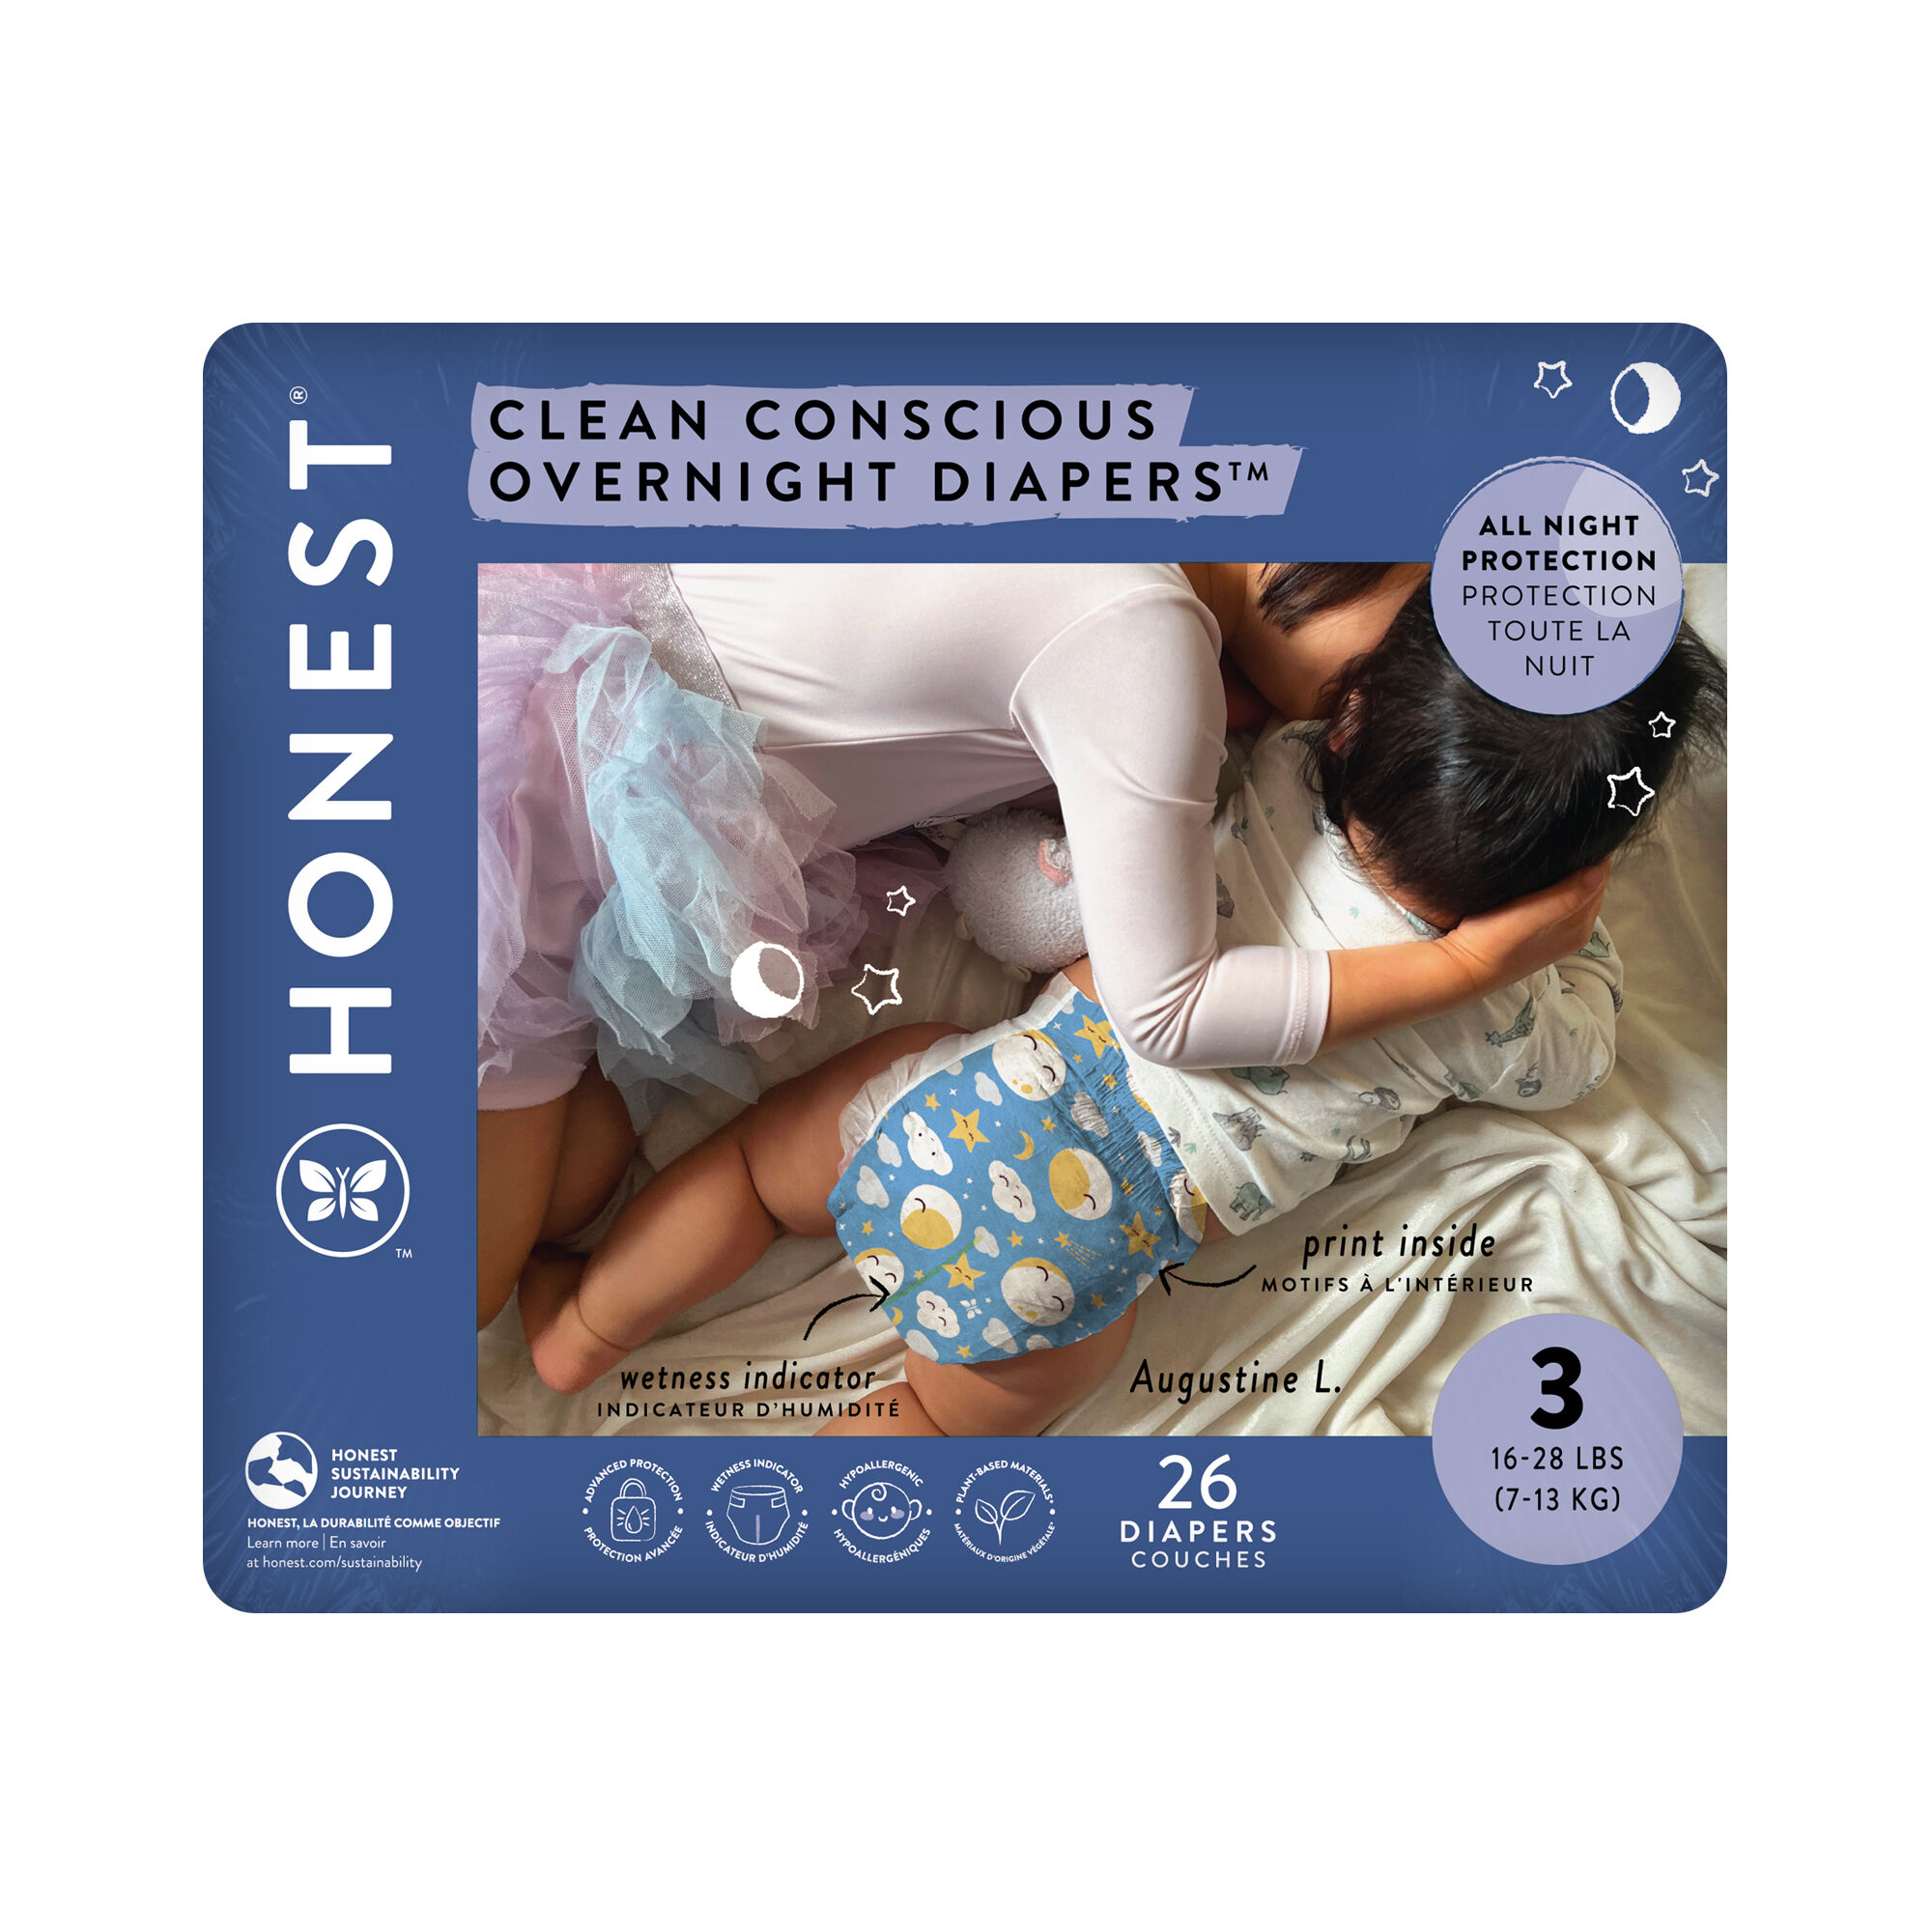 Honest Forwarder  Babymoov Baby Toiletry Bag – Care Kit aqua